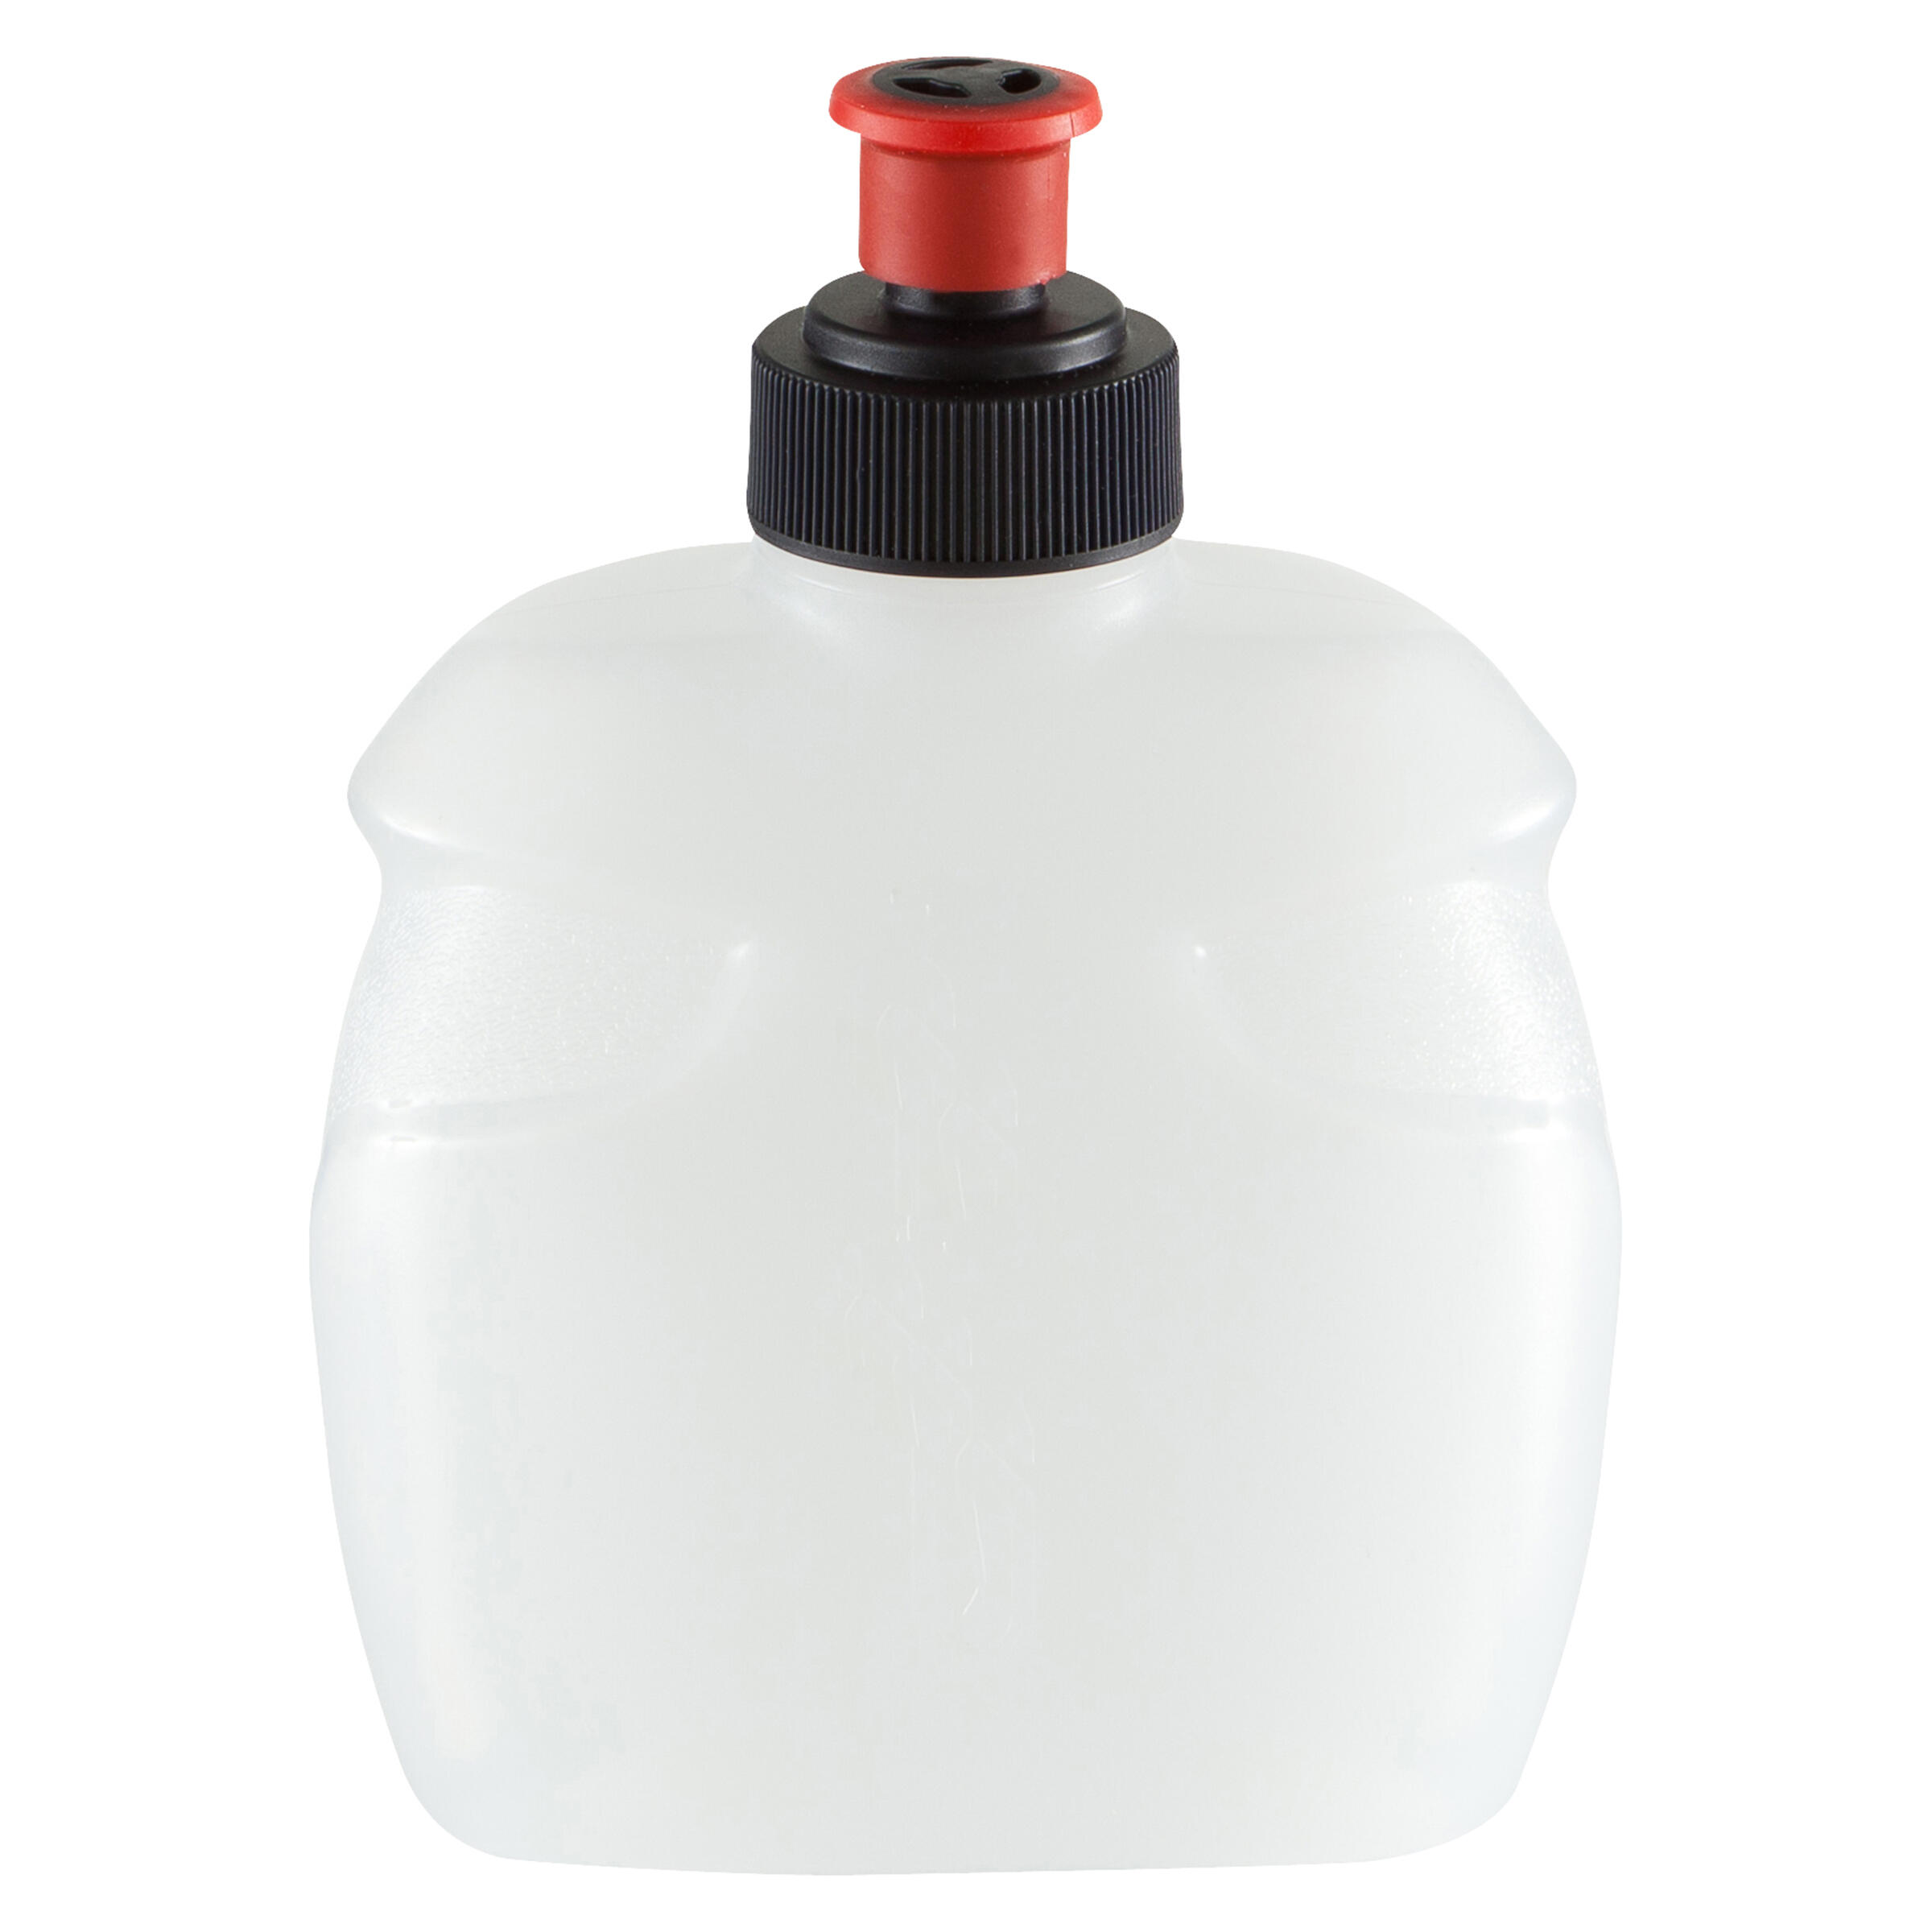 soft flask 250 ml decathlon